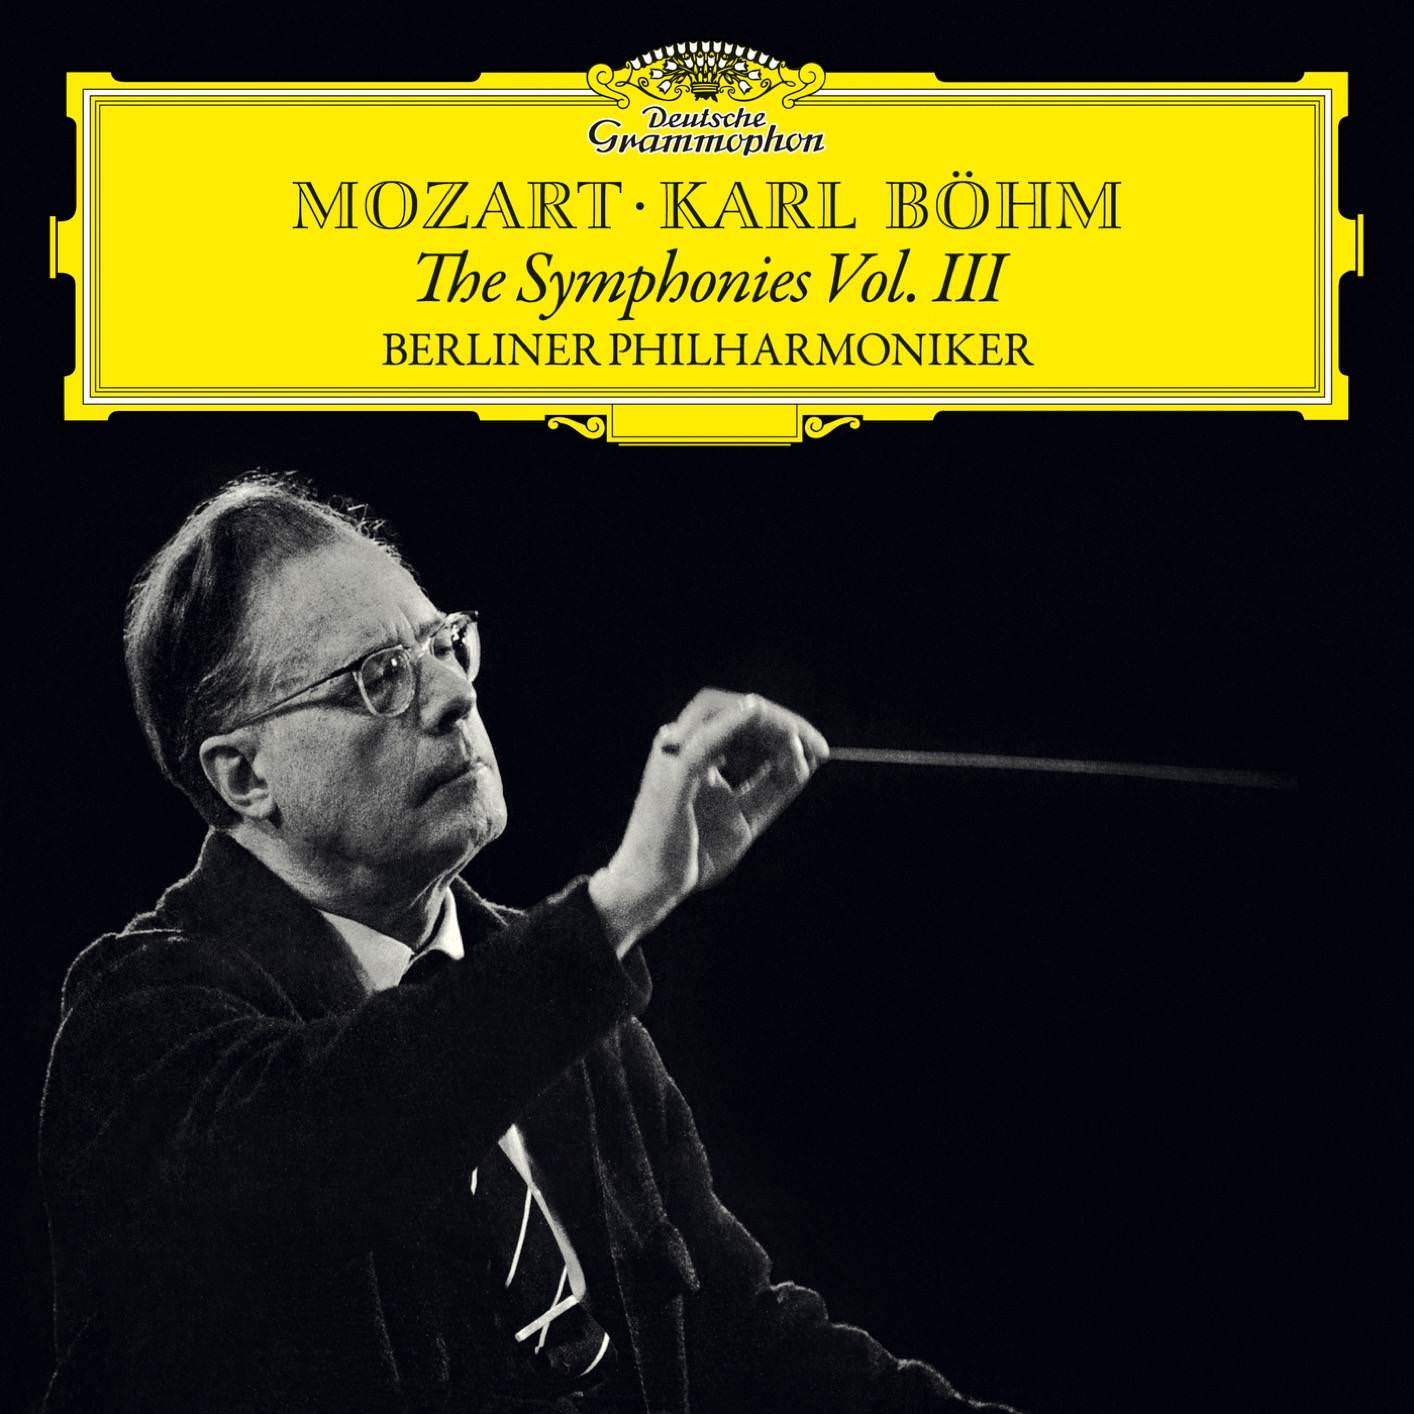 Berliner Philharmoniker & Karl Bohm - Mozart: The Symphonies Vol. III (Remastered) (2018) [FLAC 24bit/192kHz]